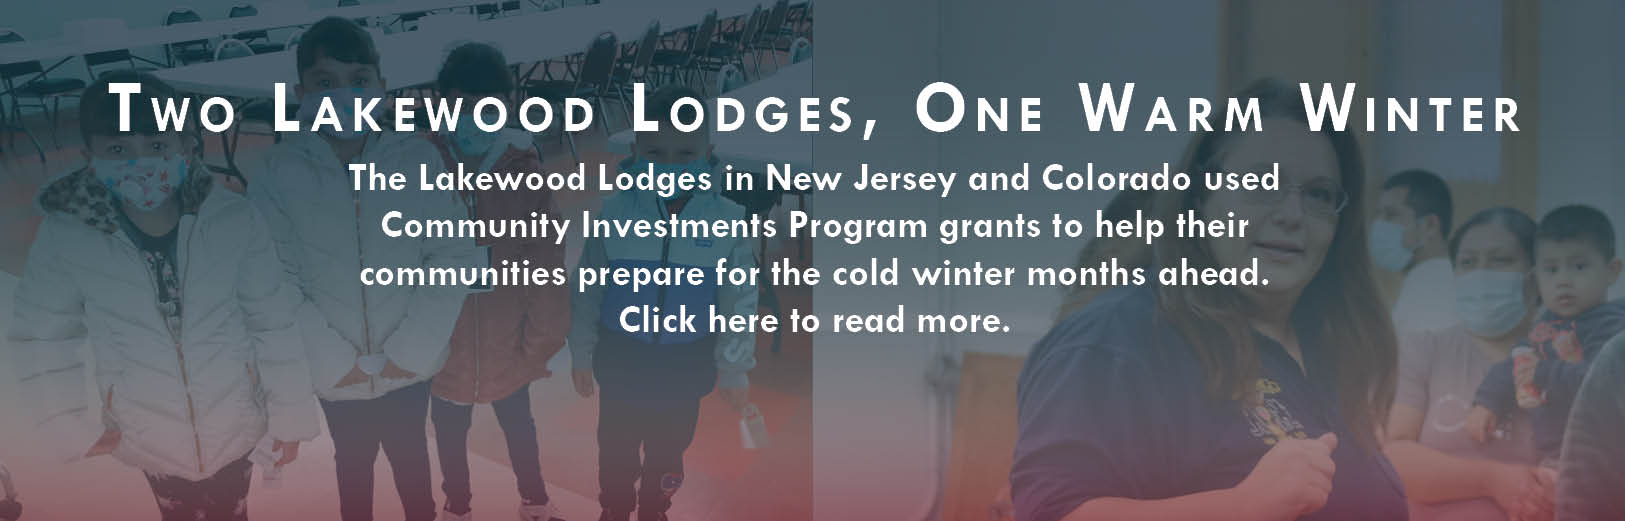 lakewood lodge coats